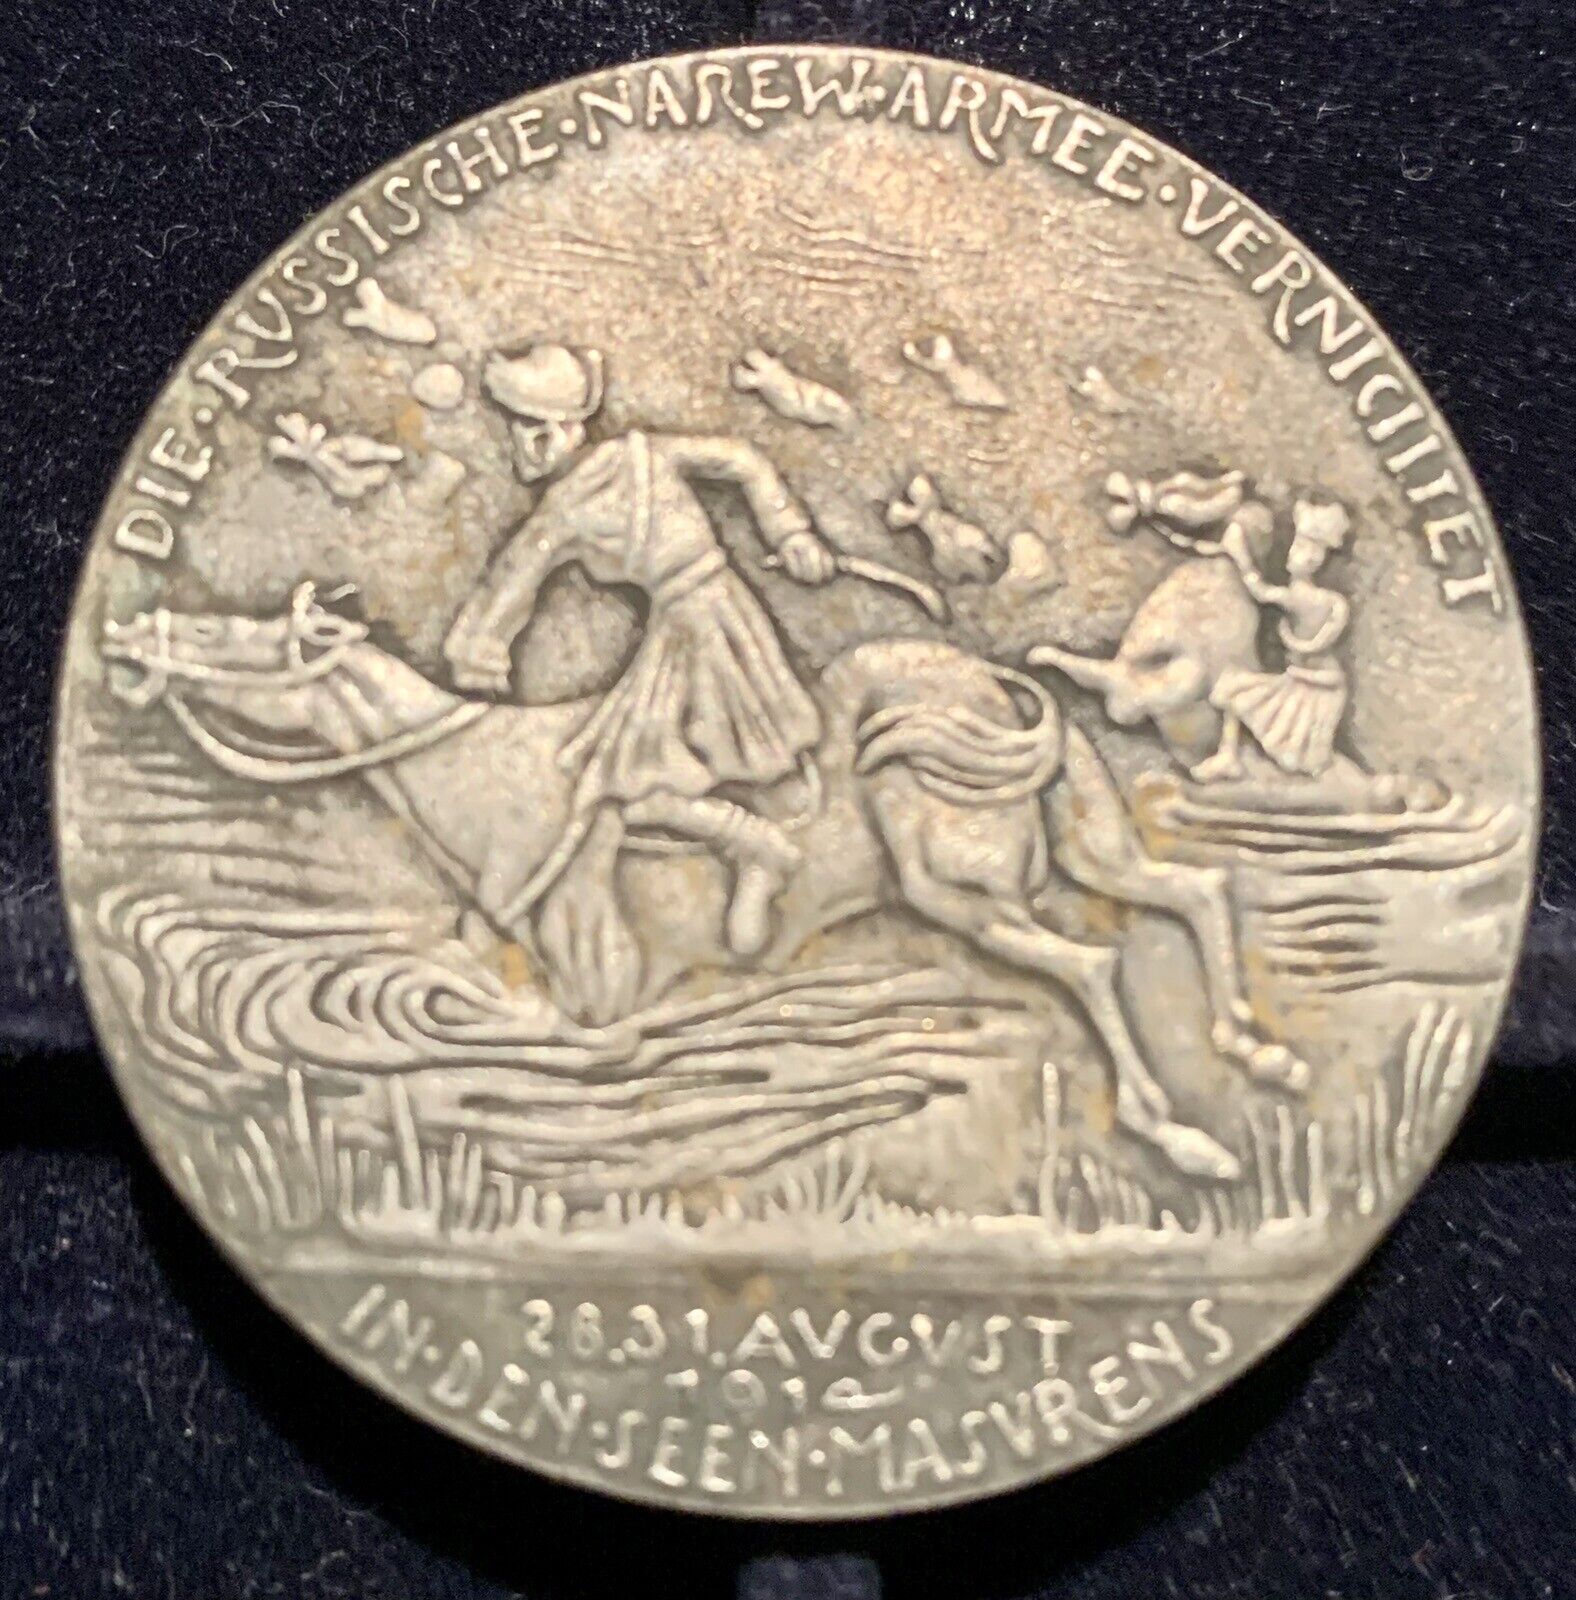 Battle of the Masurian Lakes 1915 Souvenir Medal